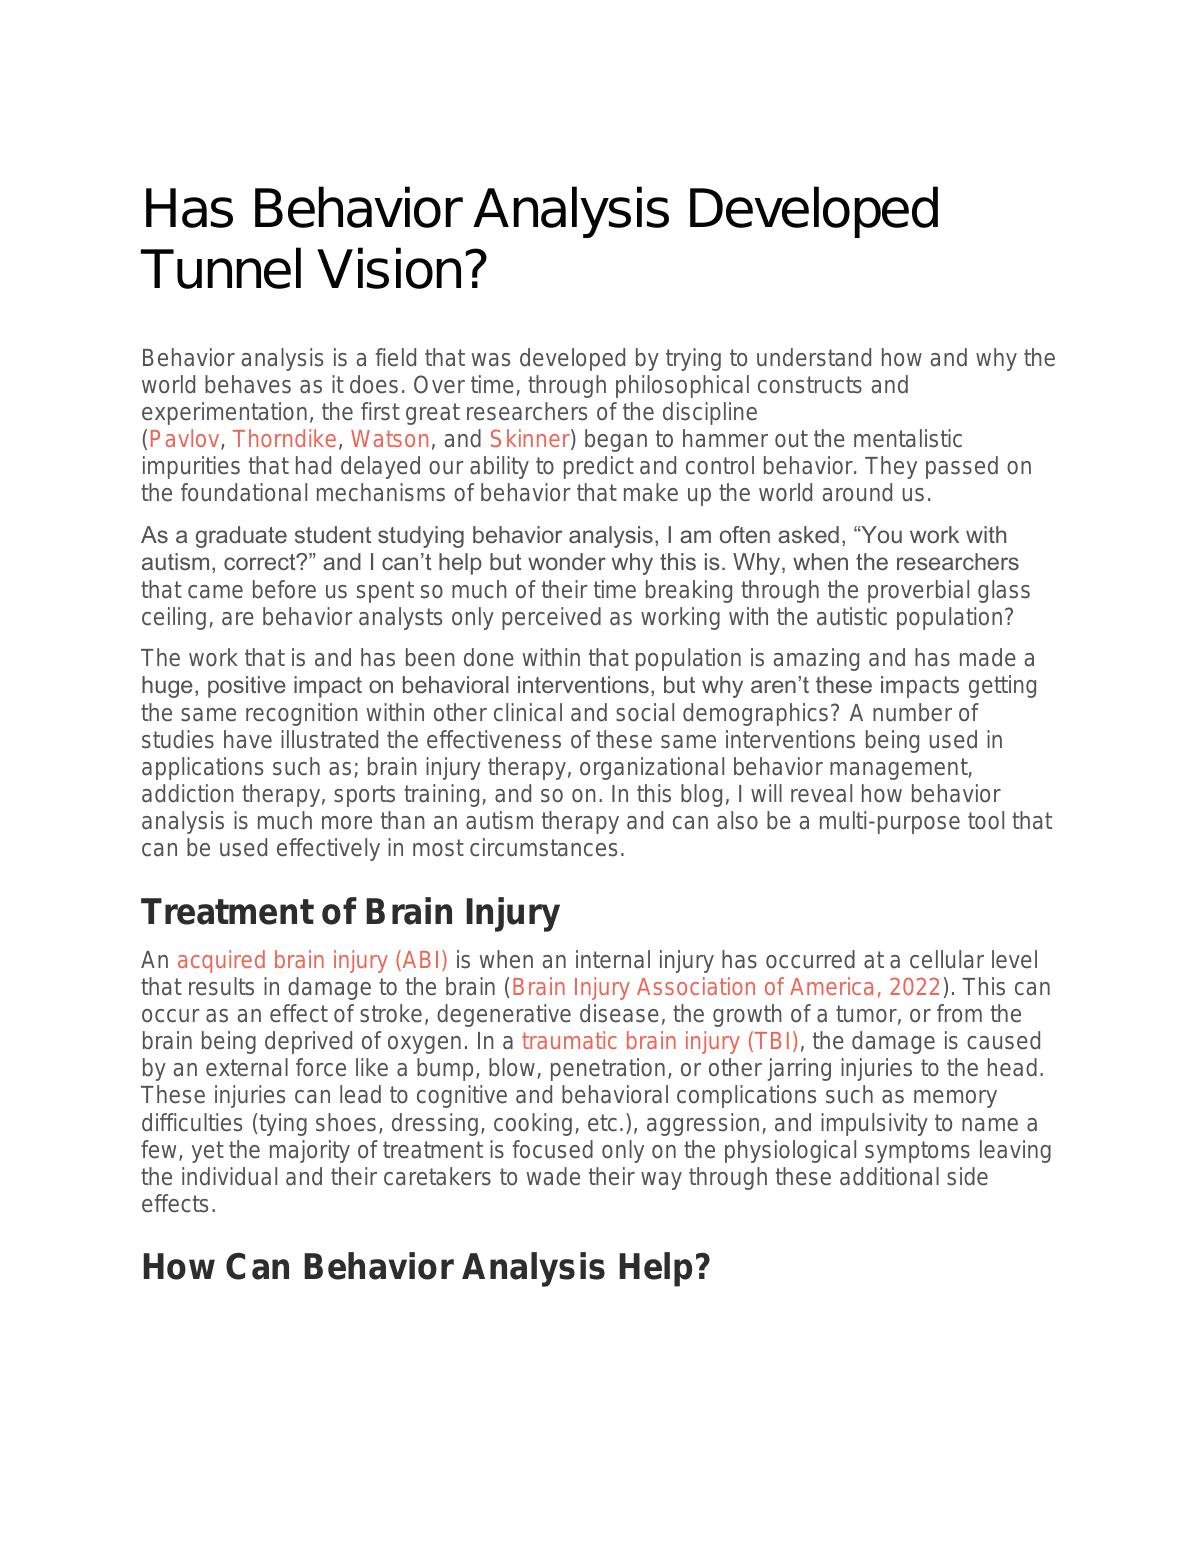 Has Behavior Analysis Developed Tunnel Vision?